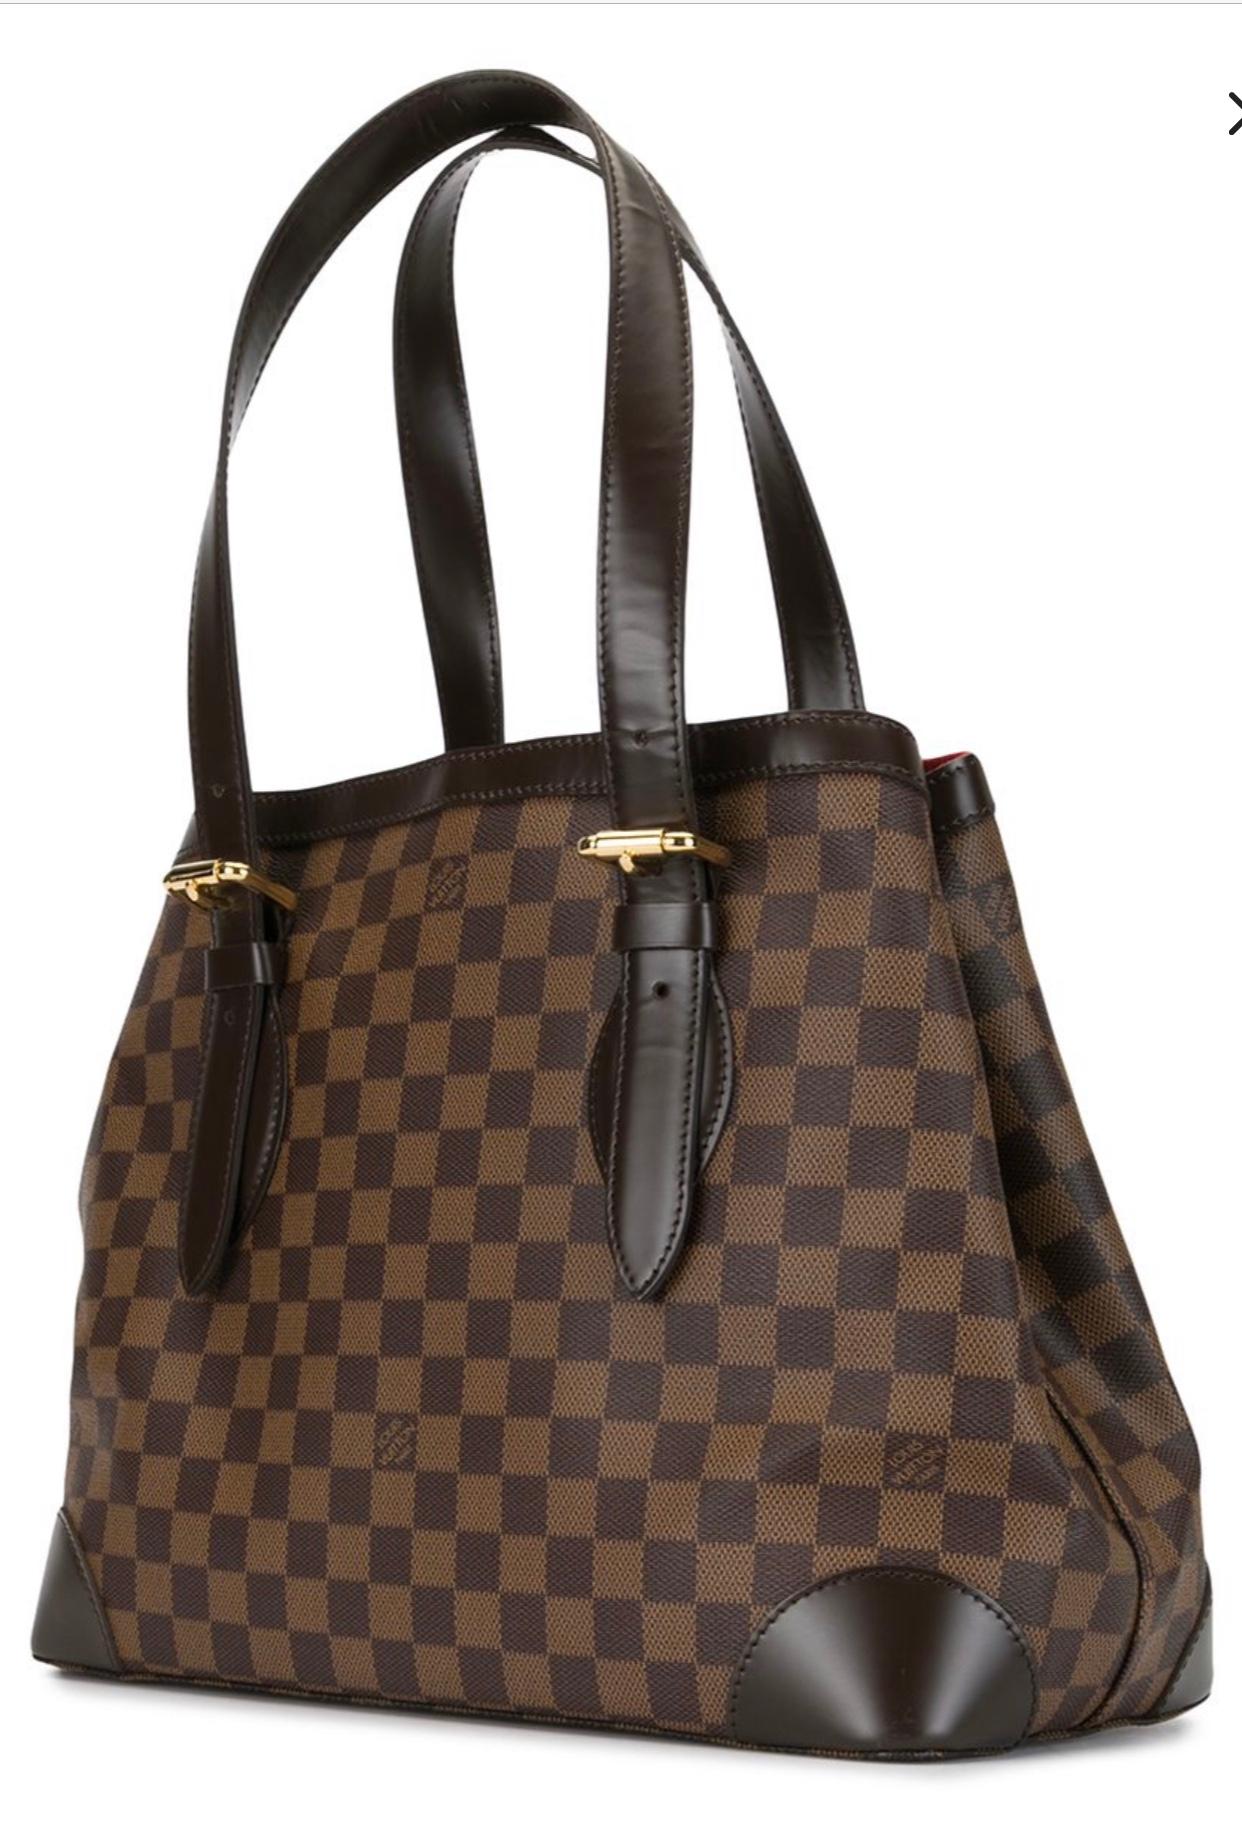 Black Louis Vuitton Hampstead Handbag Damier Ebene GM, Golden Hardware Like New